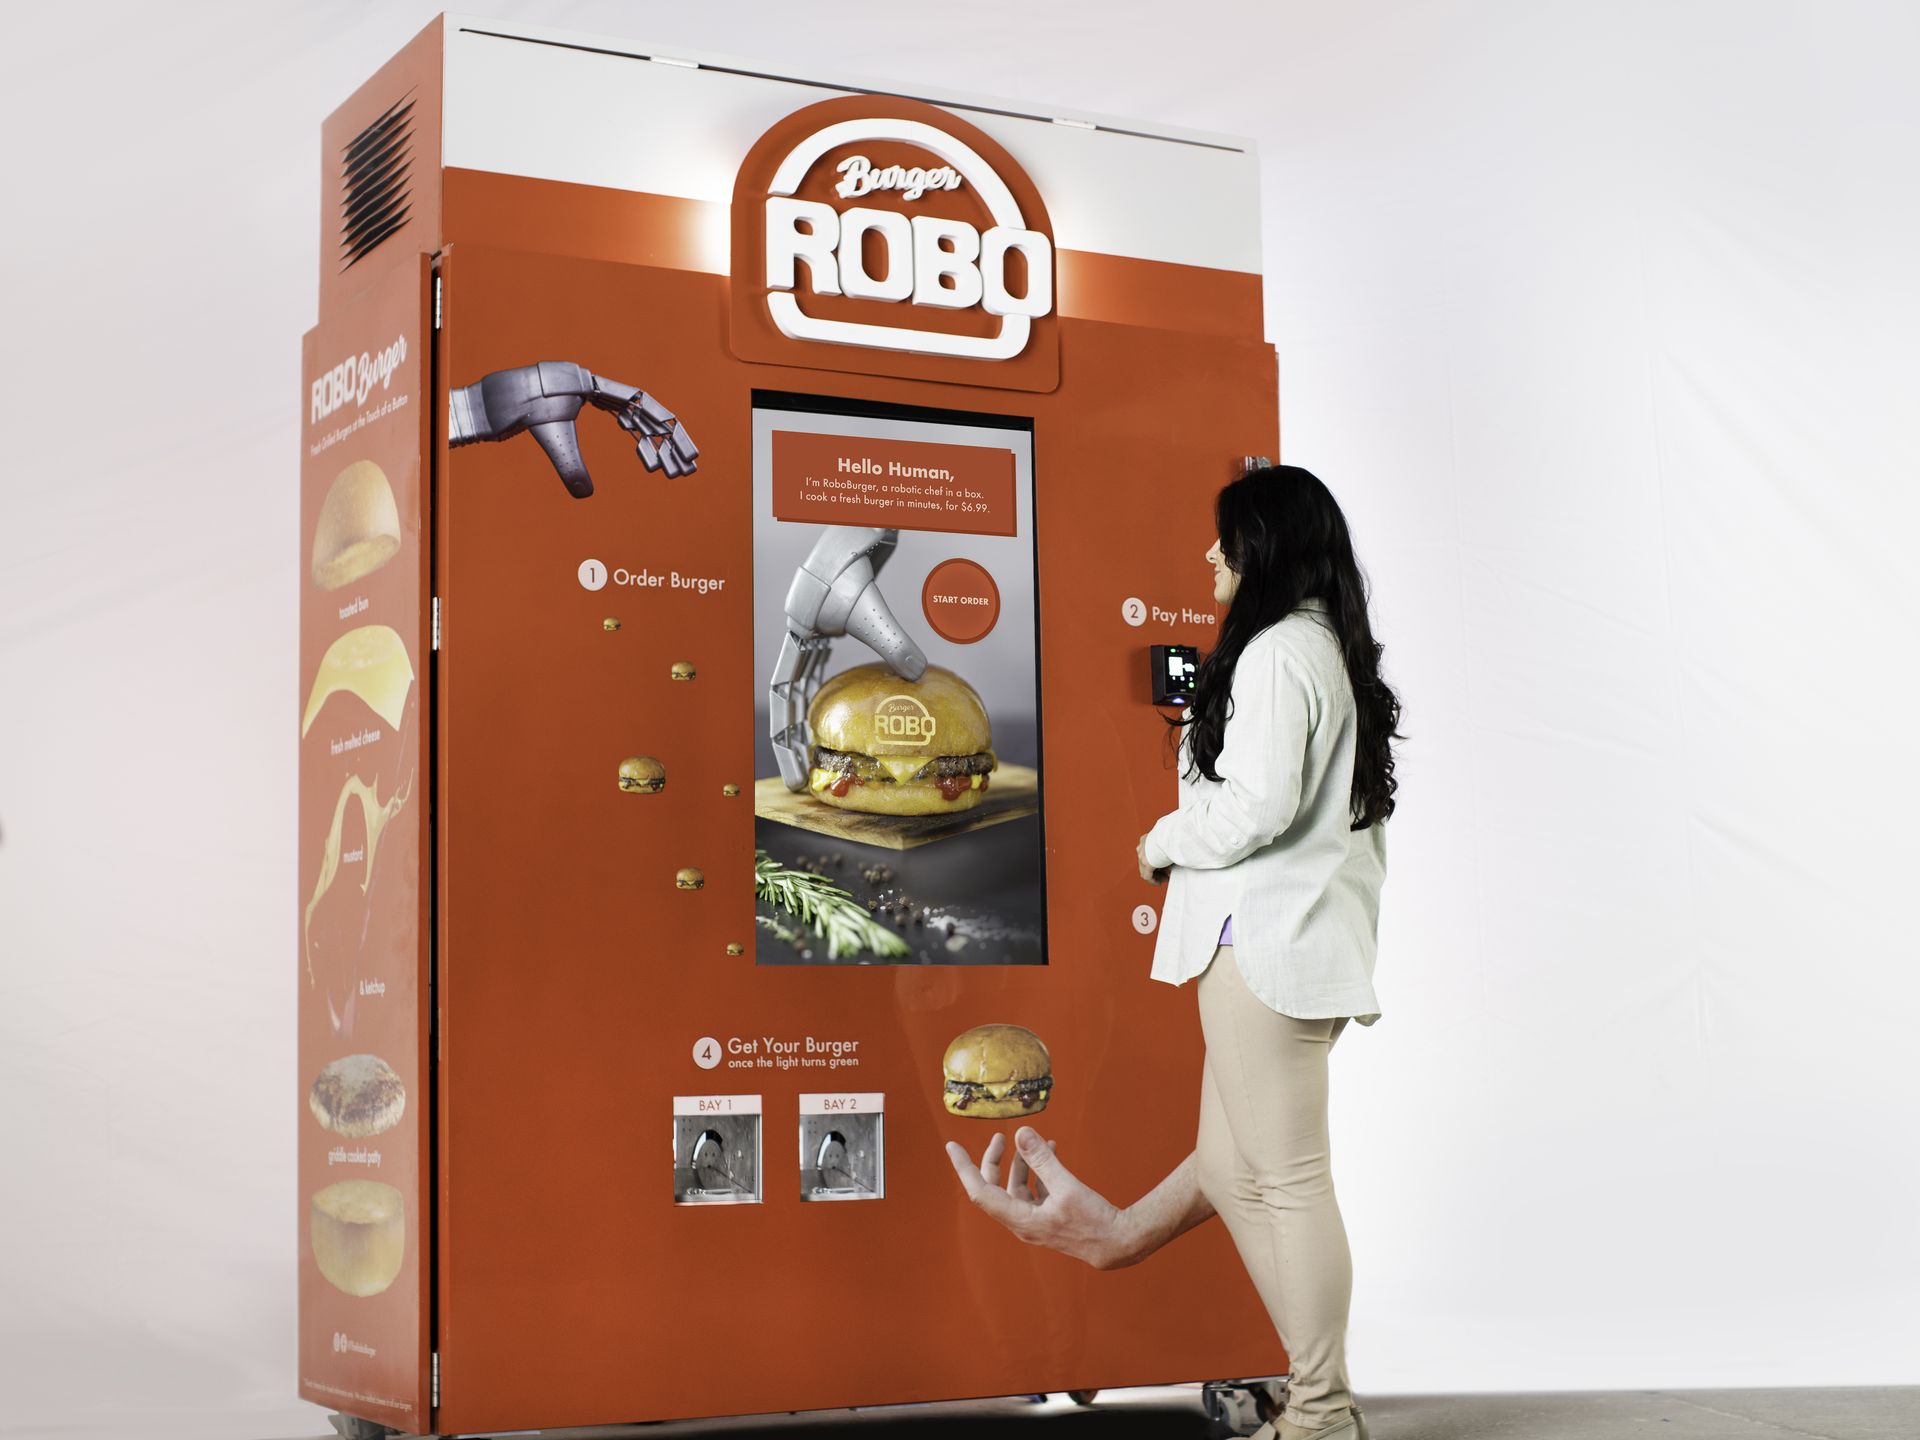 The hamburger vending machine has arrived